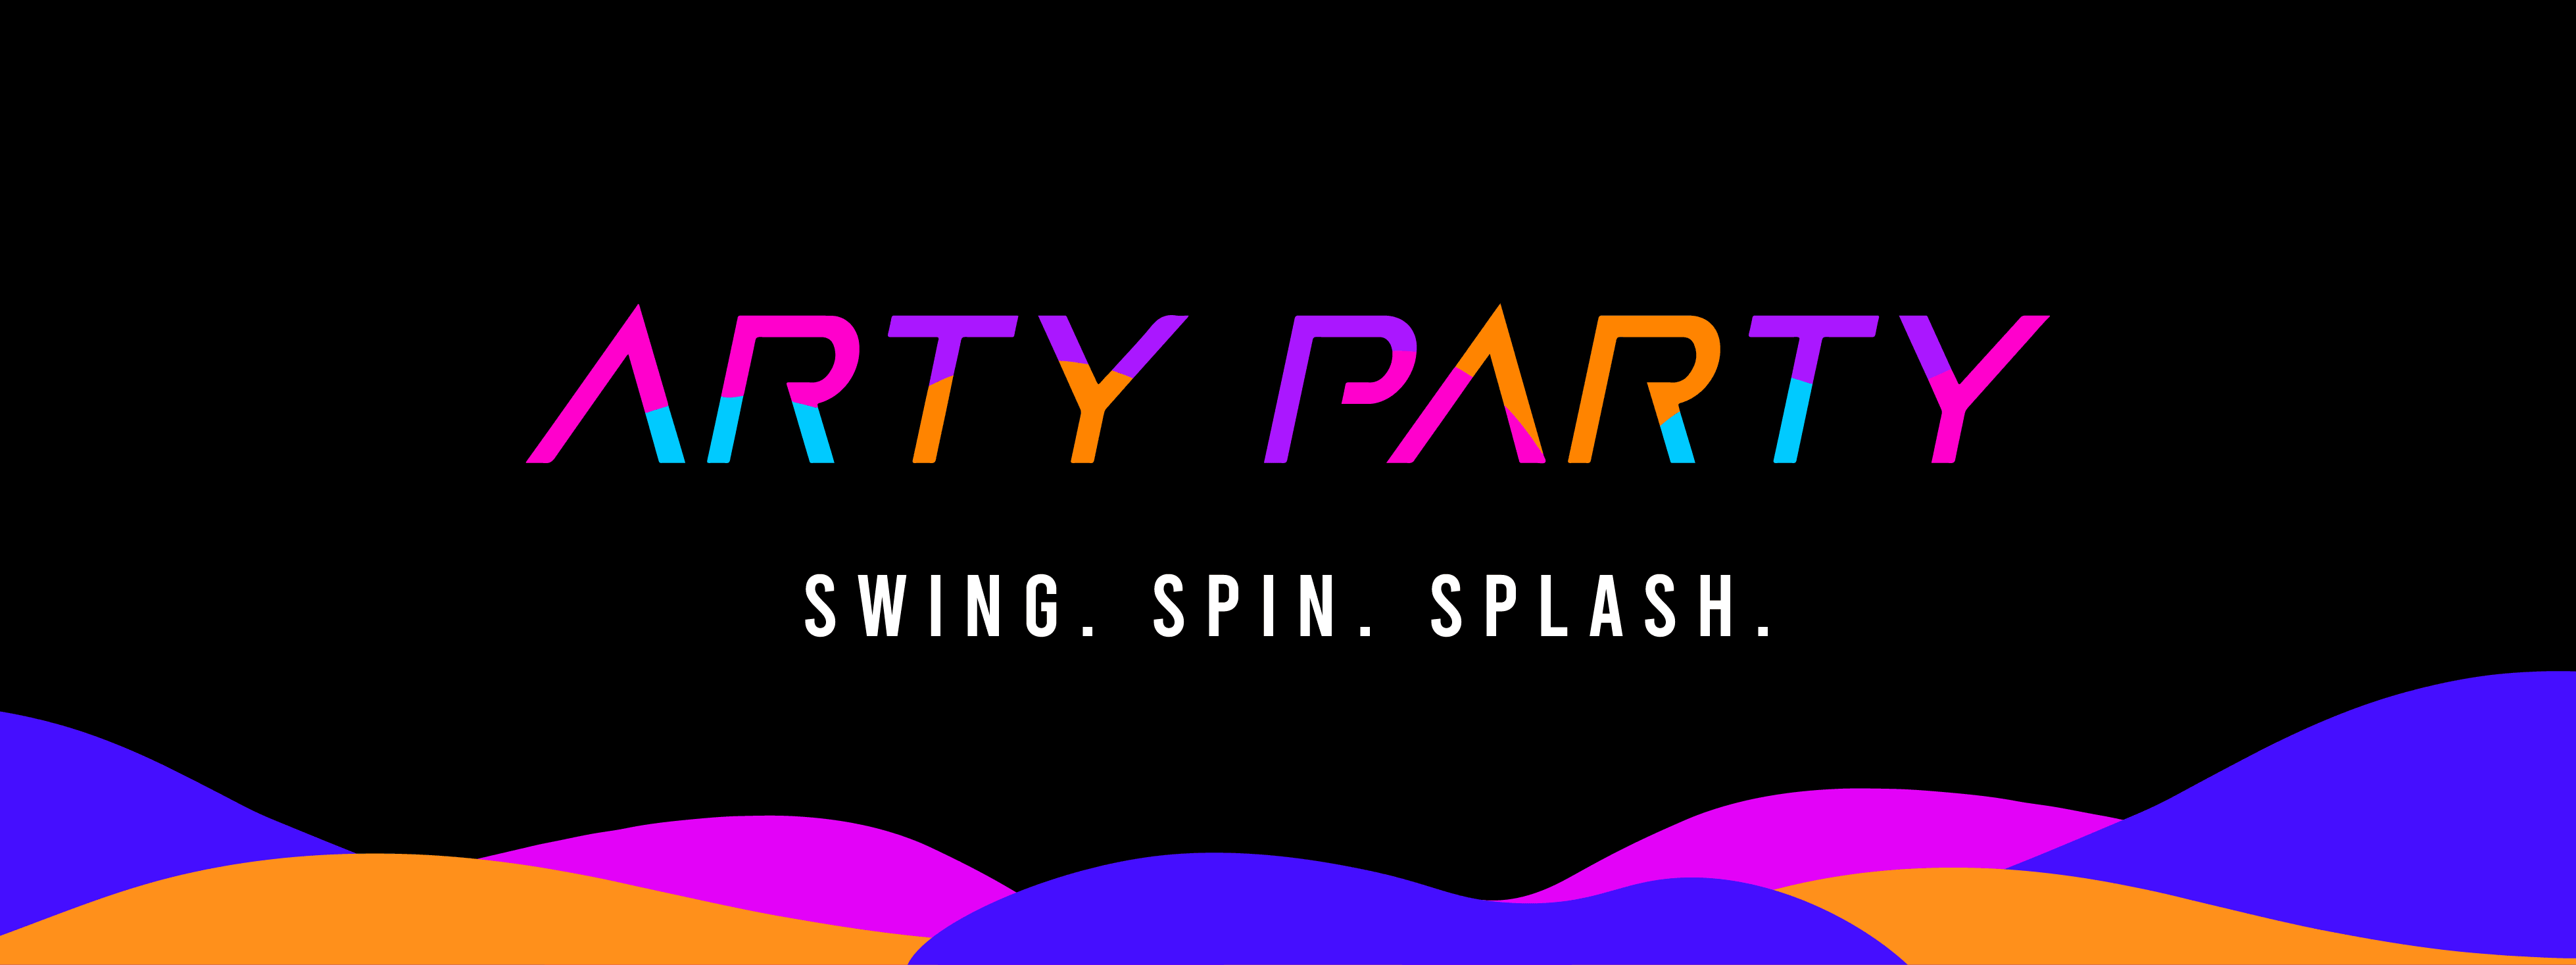 Swing Spin Splash Glow-In-The-Dark Workshop from $69 (U.P. $79) - BYKidO